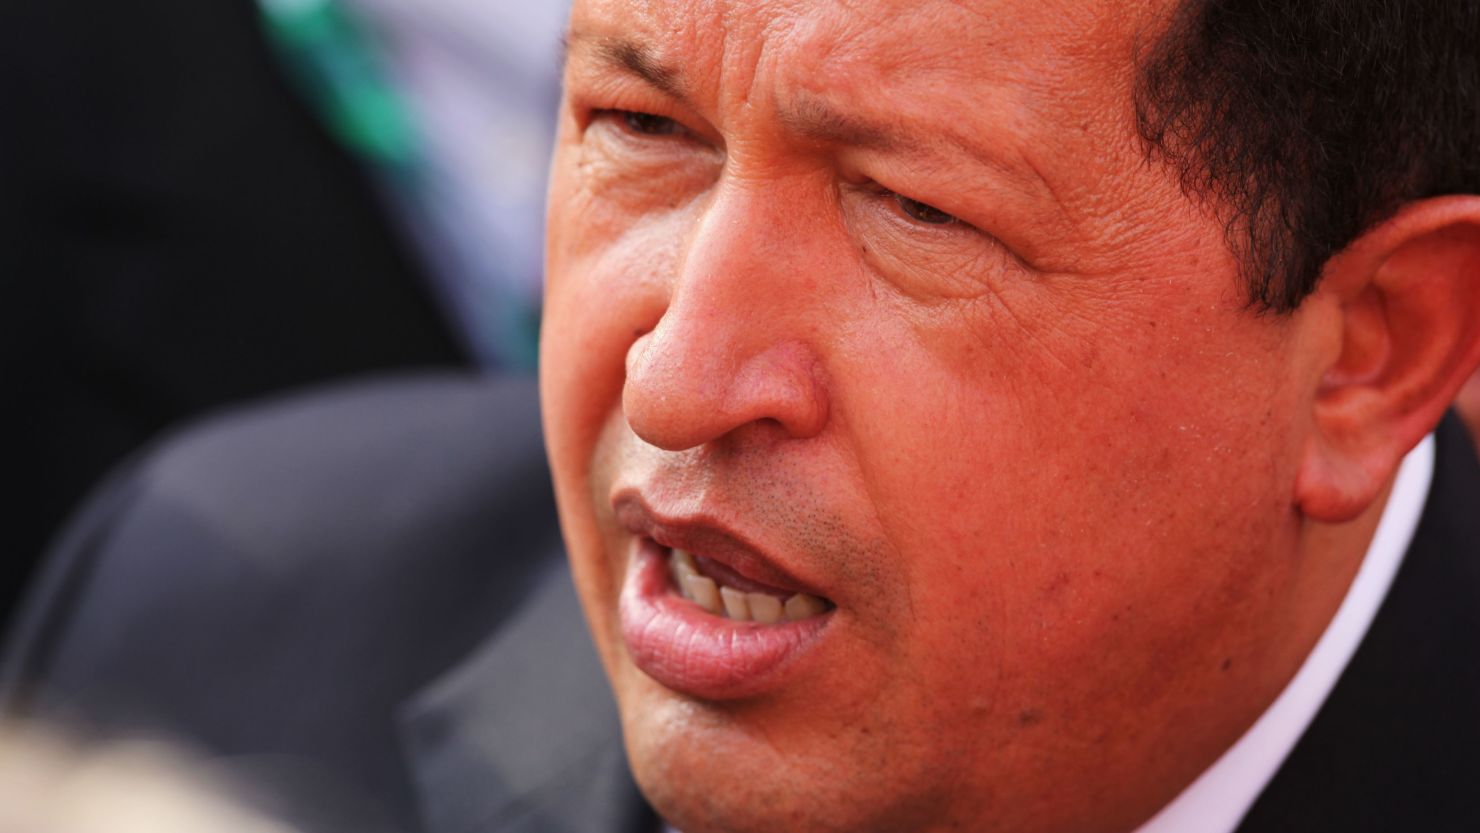 Venezuela's information minister said President Hugo Chavez is battling a respiratory infection.